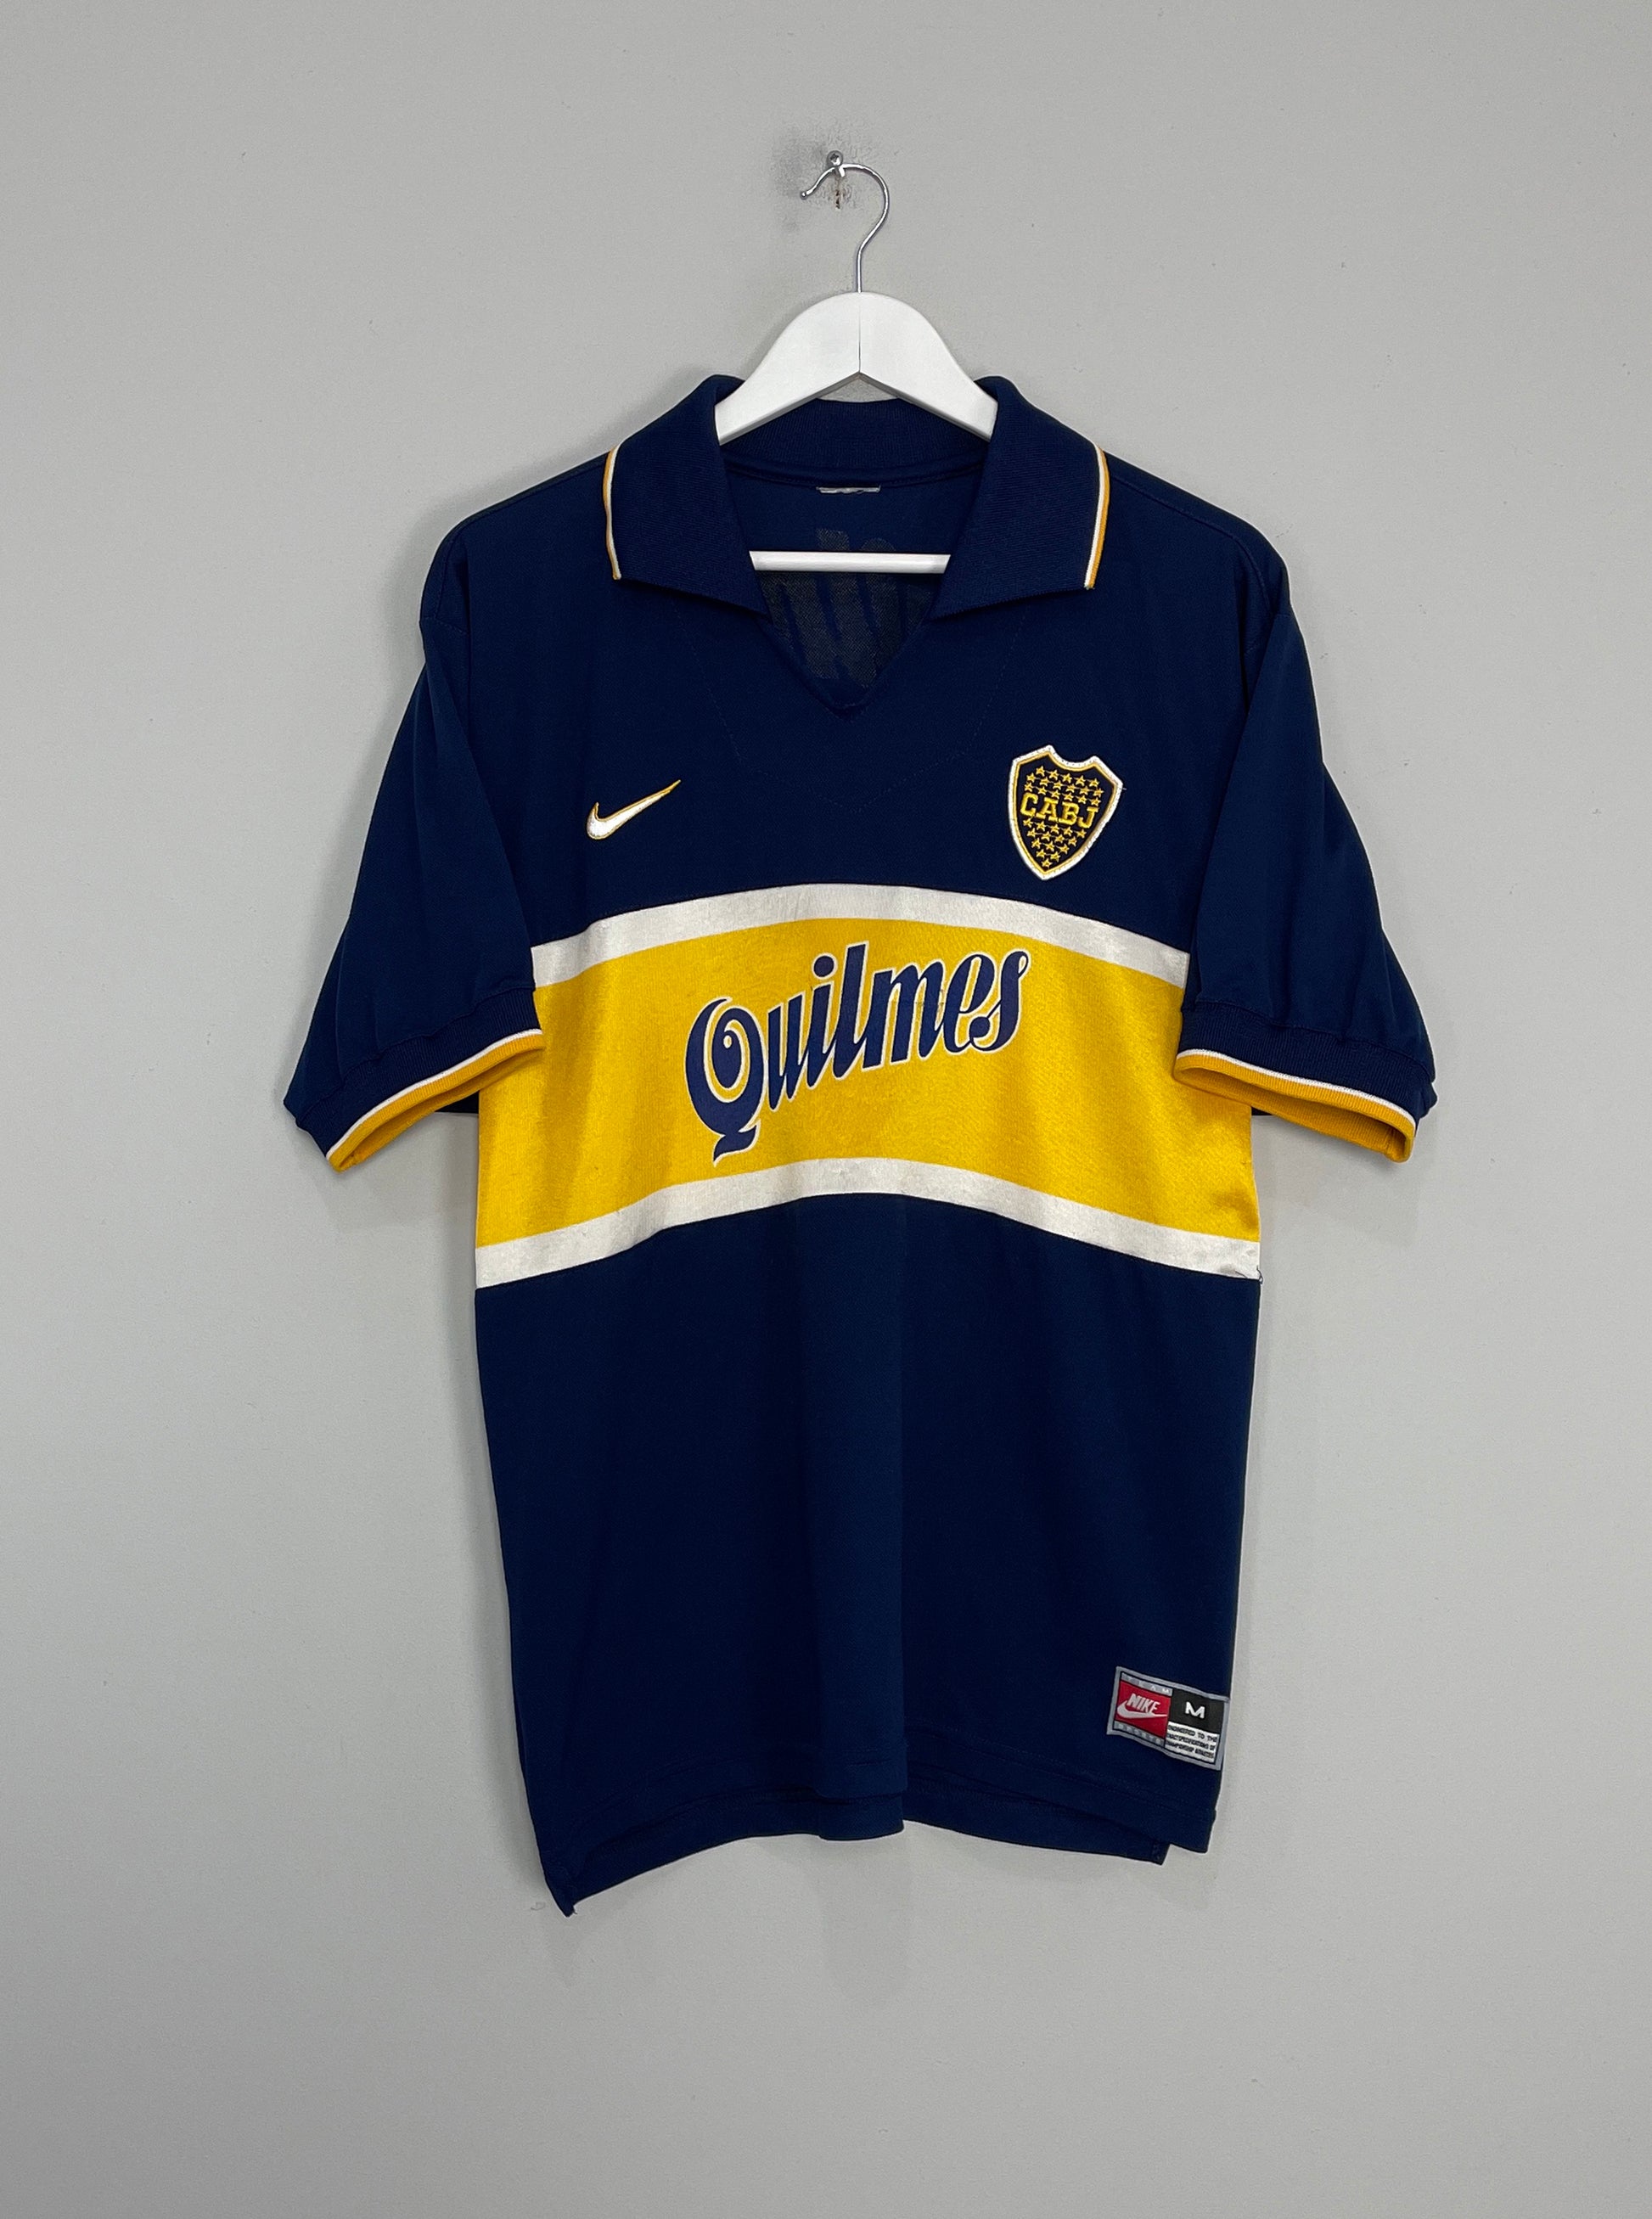 Image of the Boca Juniors shirt from the 1996/98 season